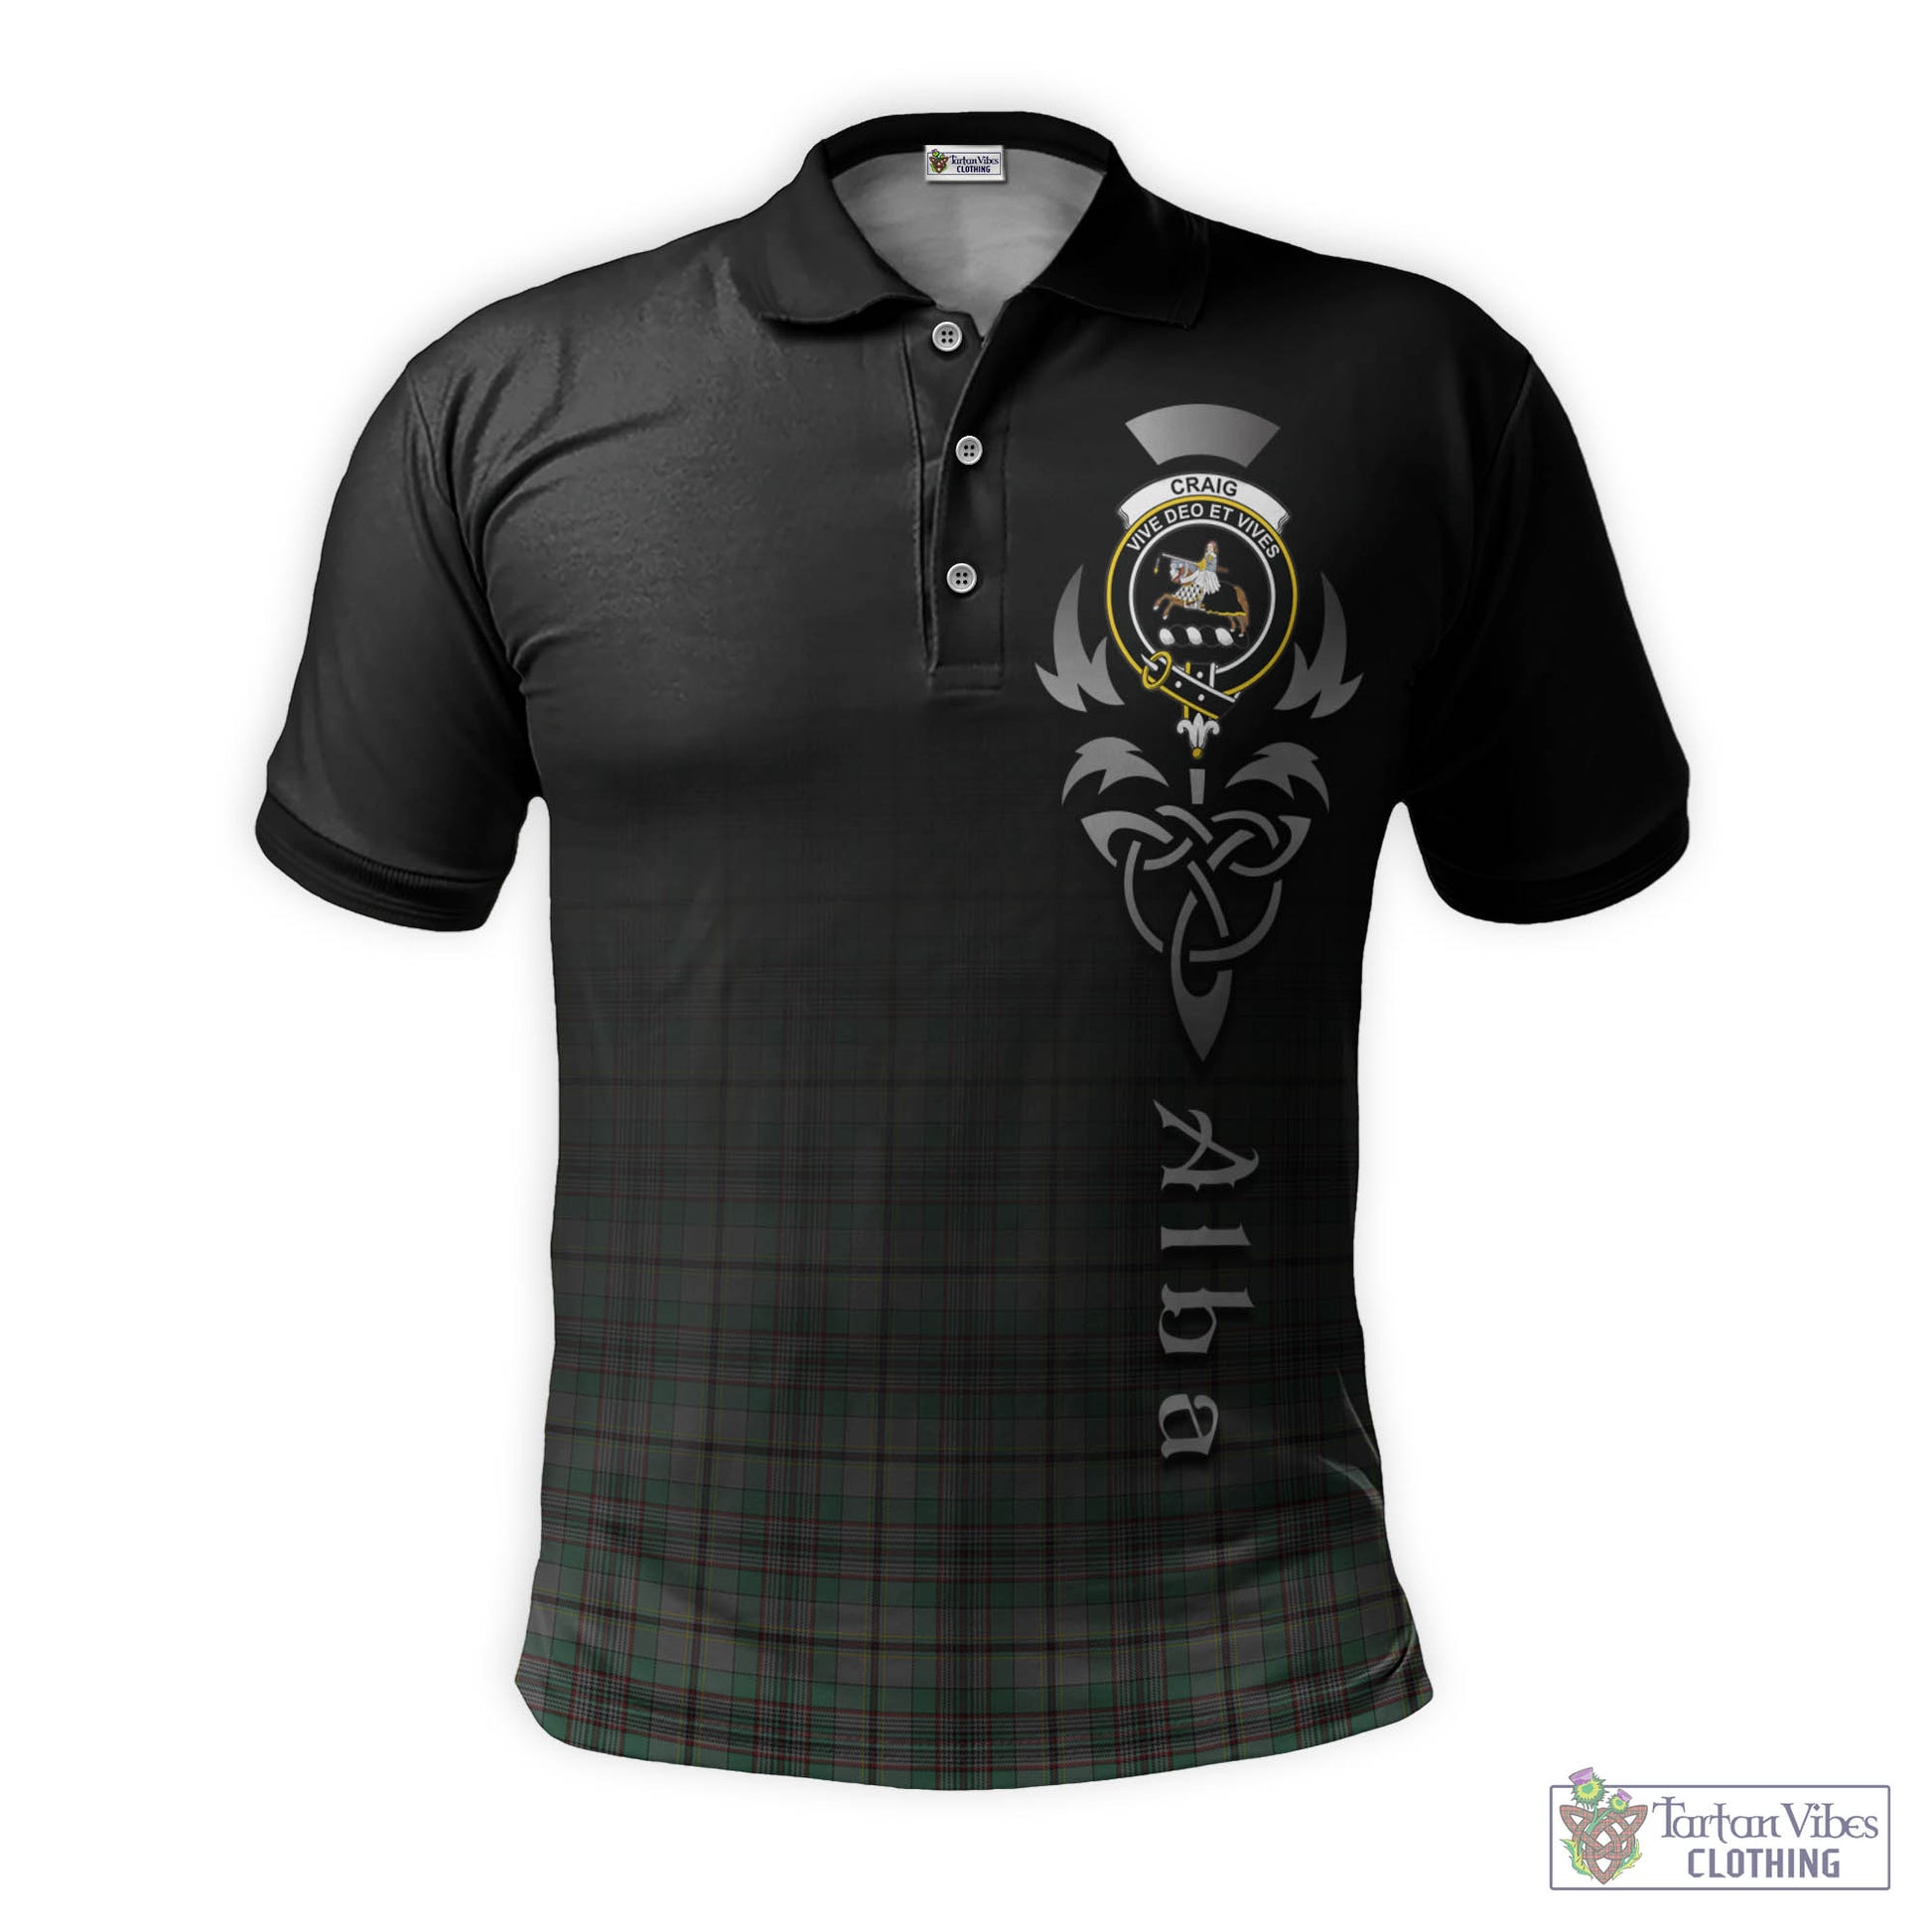 Tartan Vibes Clothing Craig Tartan Polo Shirt Featuring Alba Gu Brath Family Crest Celtic Inspired